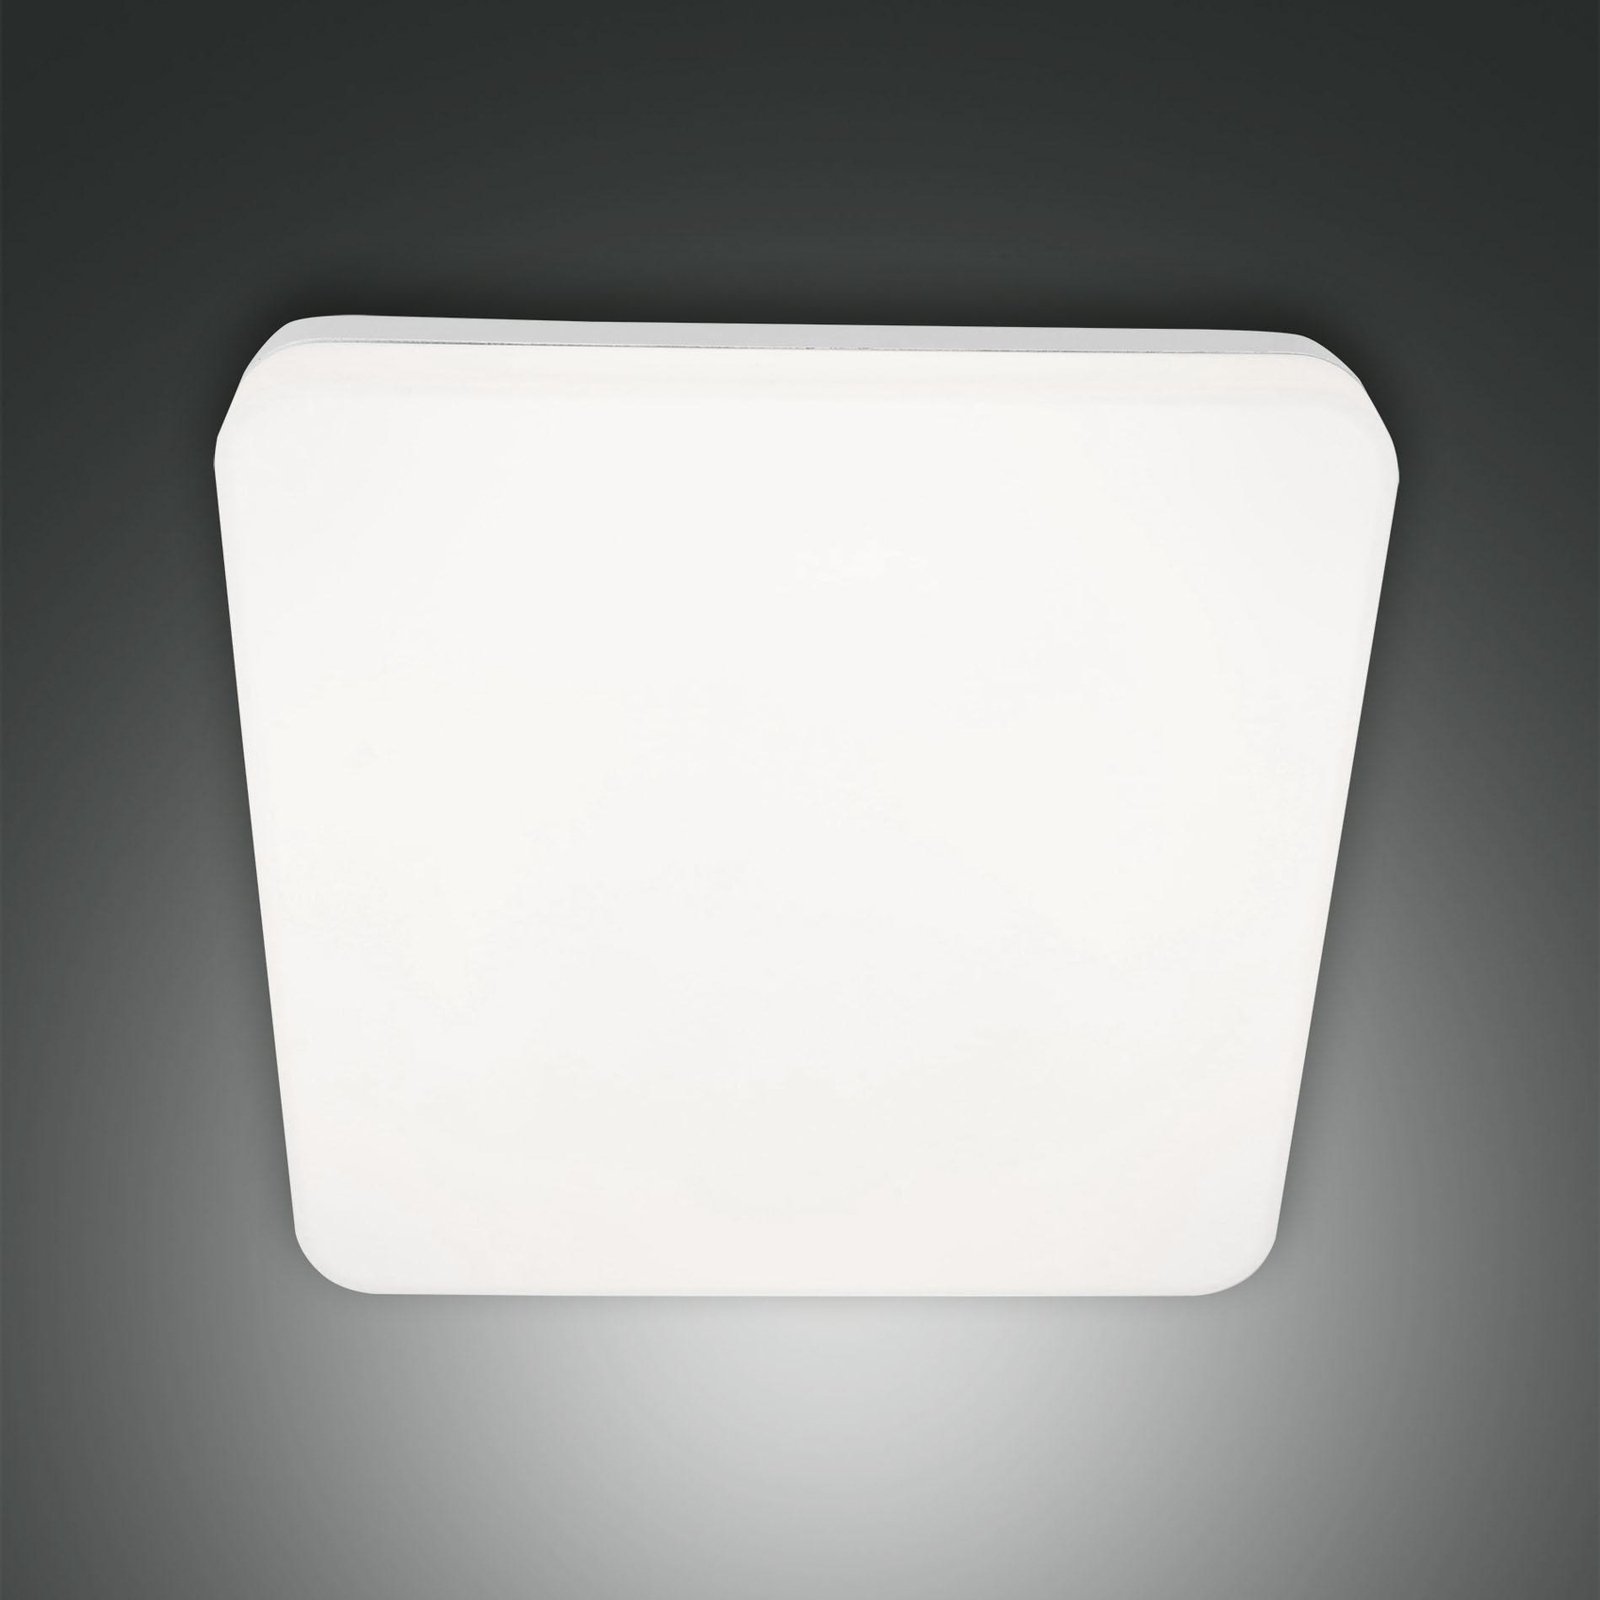 Folk LED buiten plafondlamp, 28 cm x 28 cm, wit, IP65